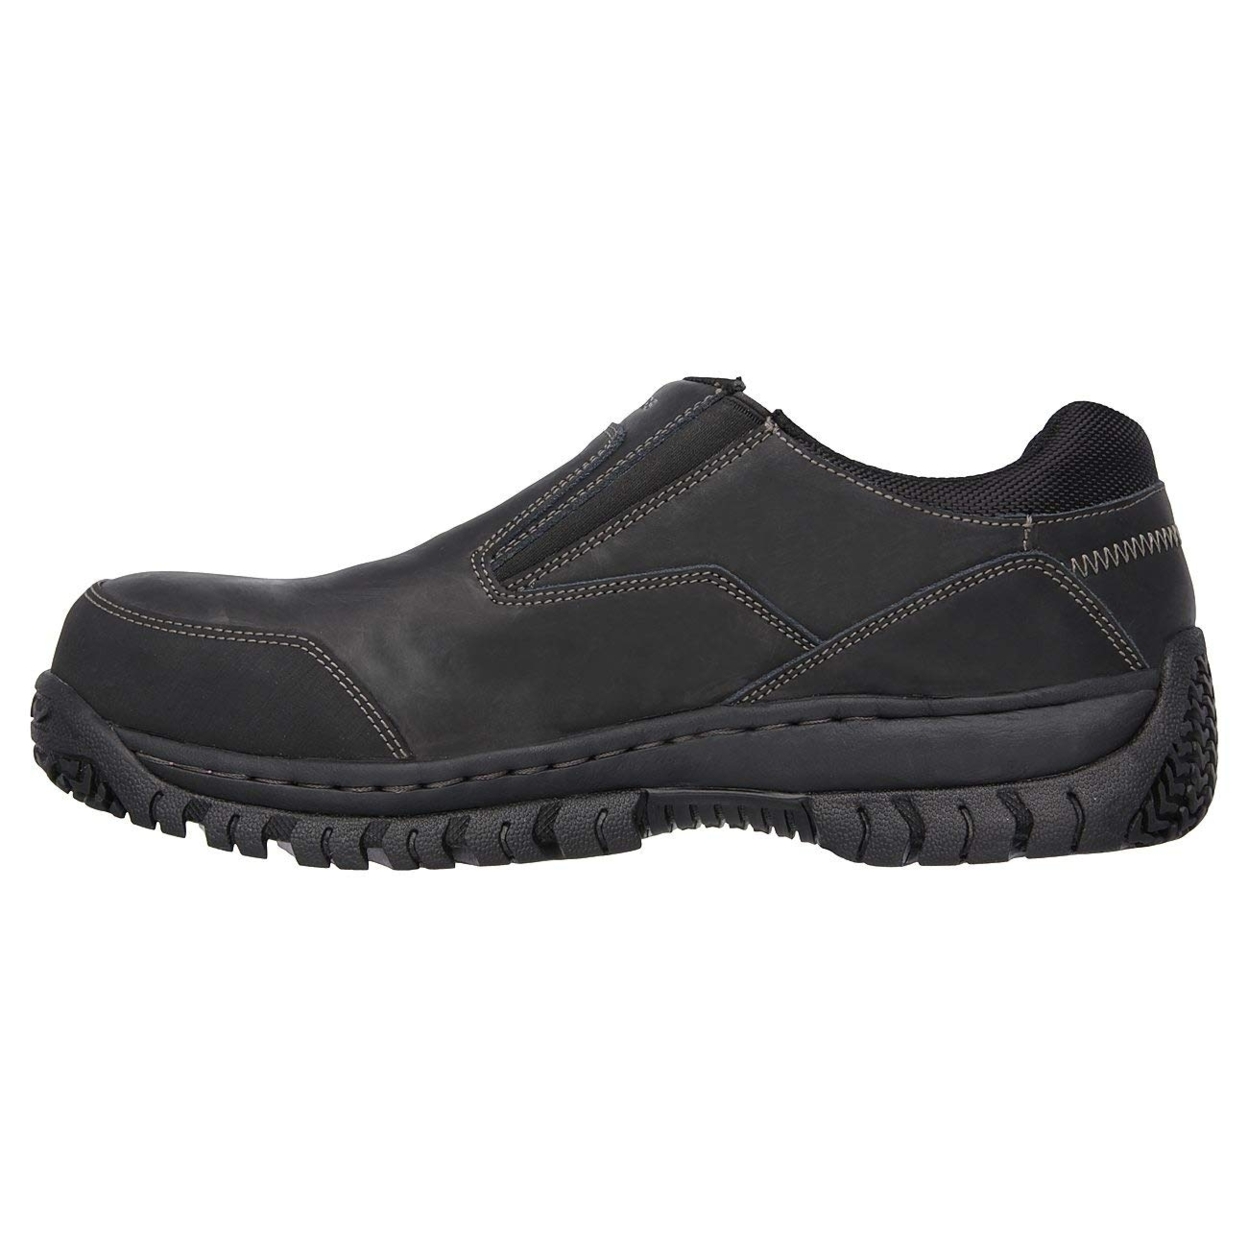 Skechers For Work Men's Hartan Steel Toe Slip-On Shoe Varies BLACK - BLACK, 13